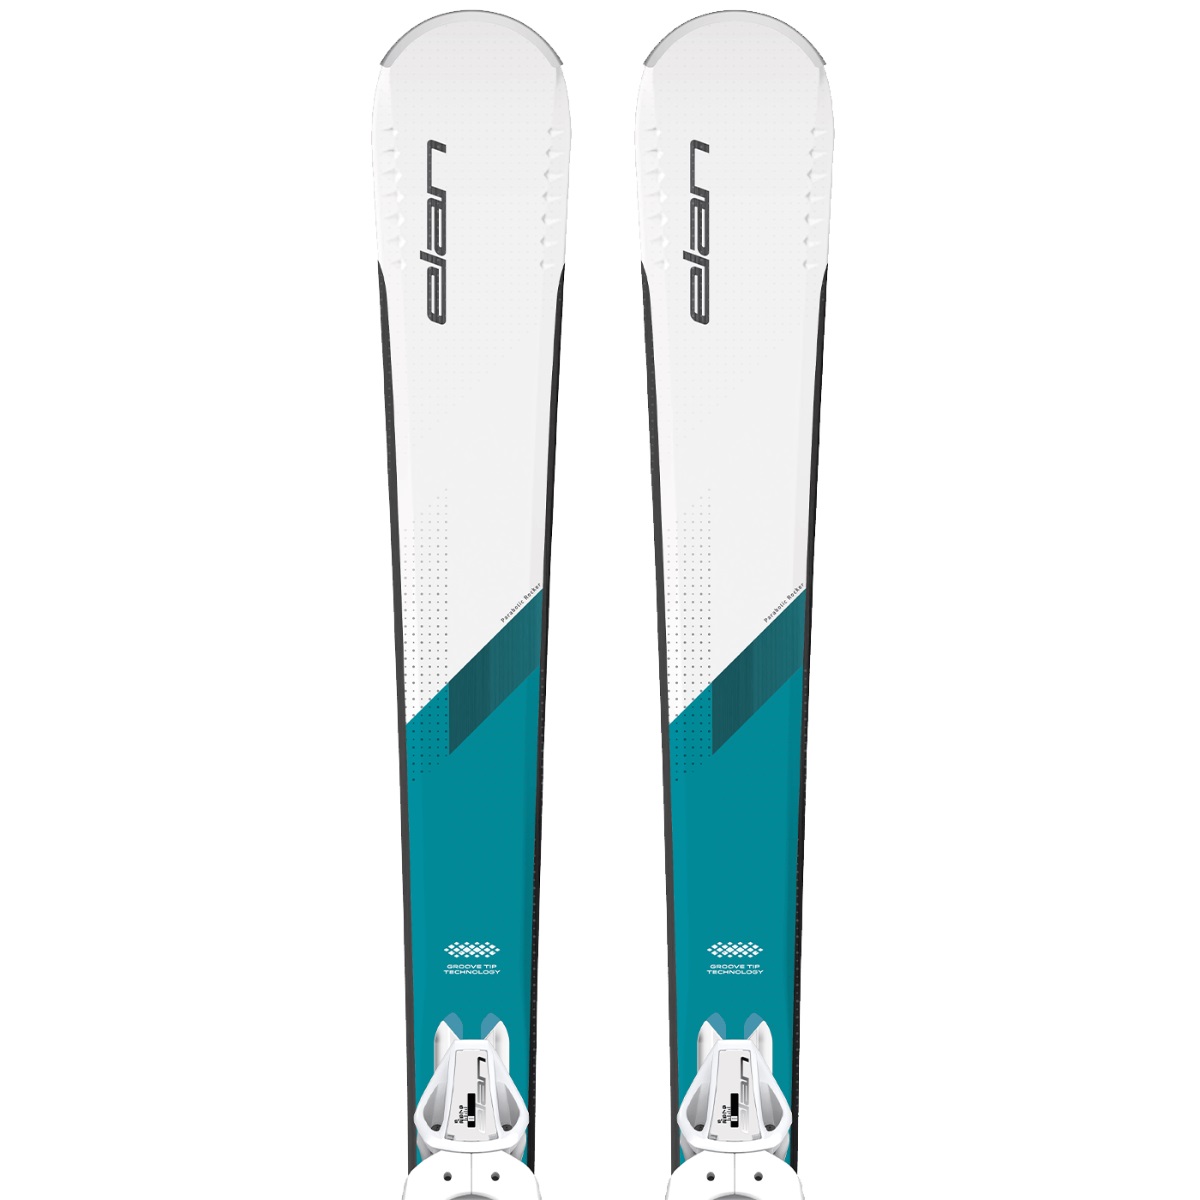 Горные лыжи Elan Smu White Magic Lightshift + Elw 9 Shift 2021, blue/white, 140 см